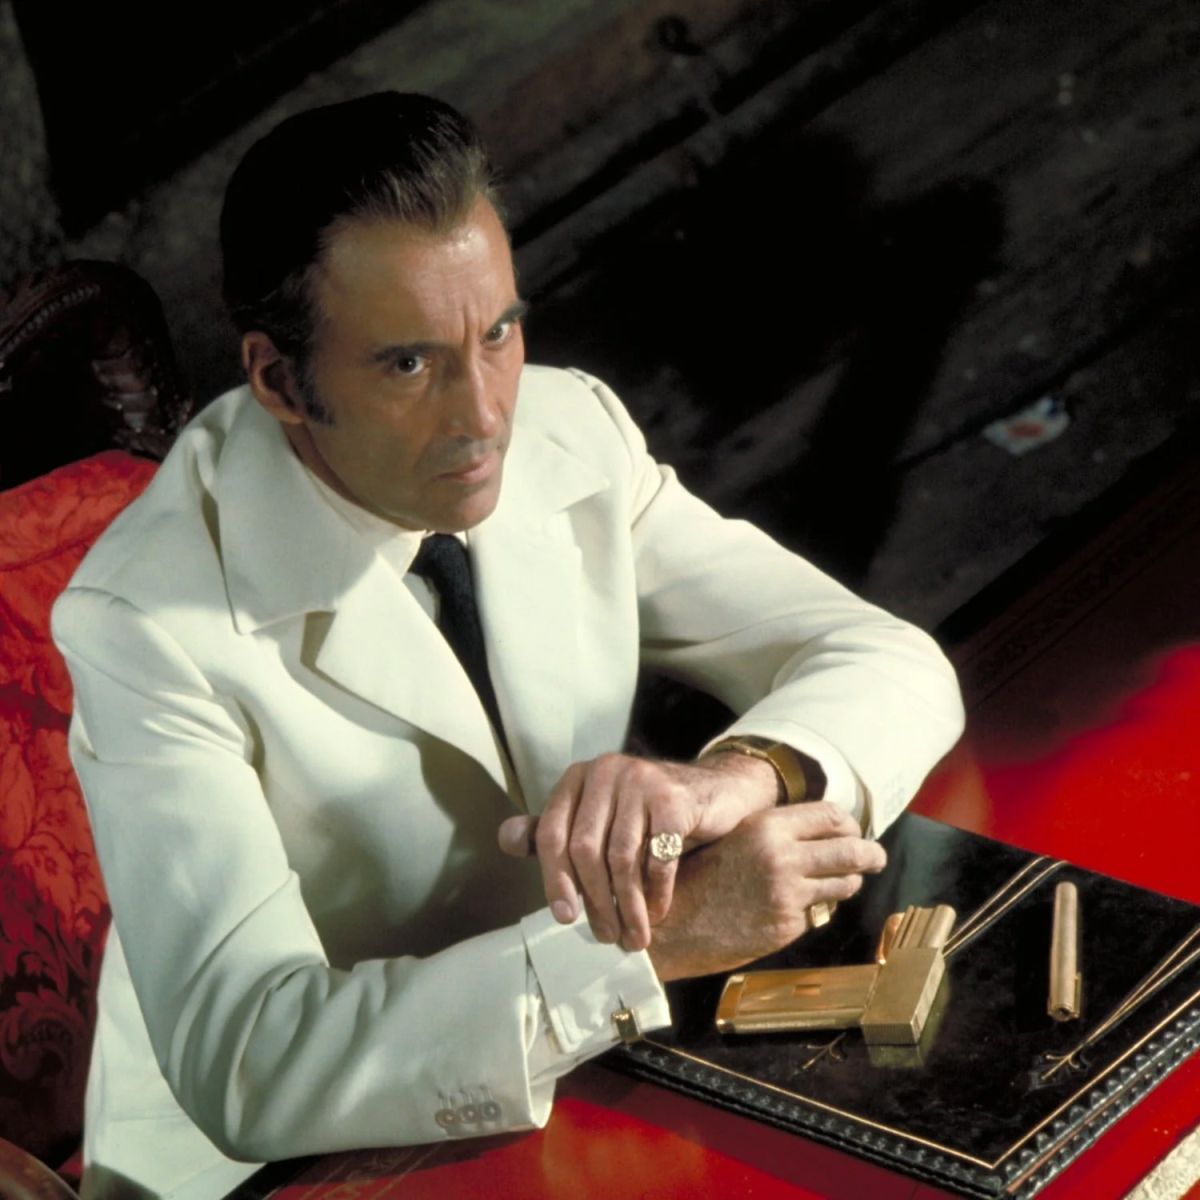 James Bond Golden Gun Prop Replica by Factory Entertainment metal Scaramanga Christopher Lee